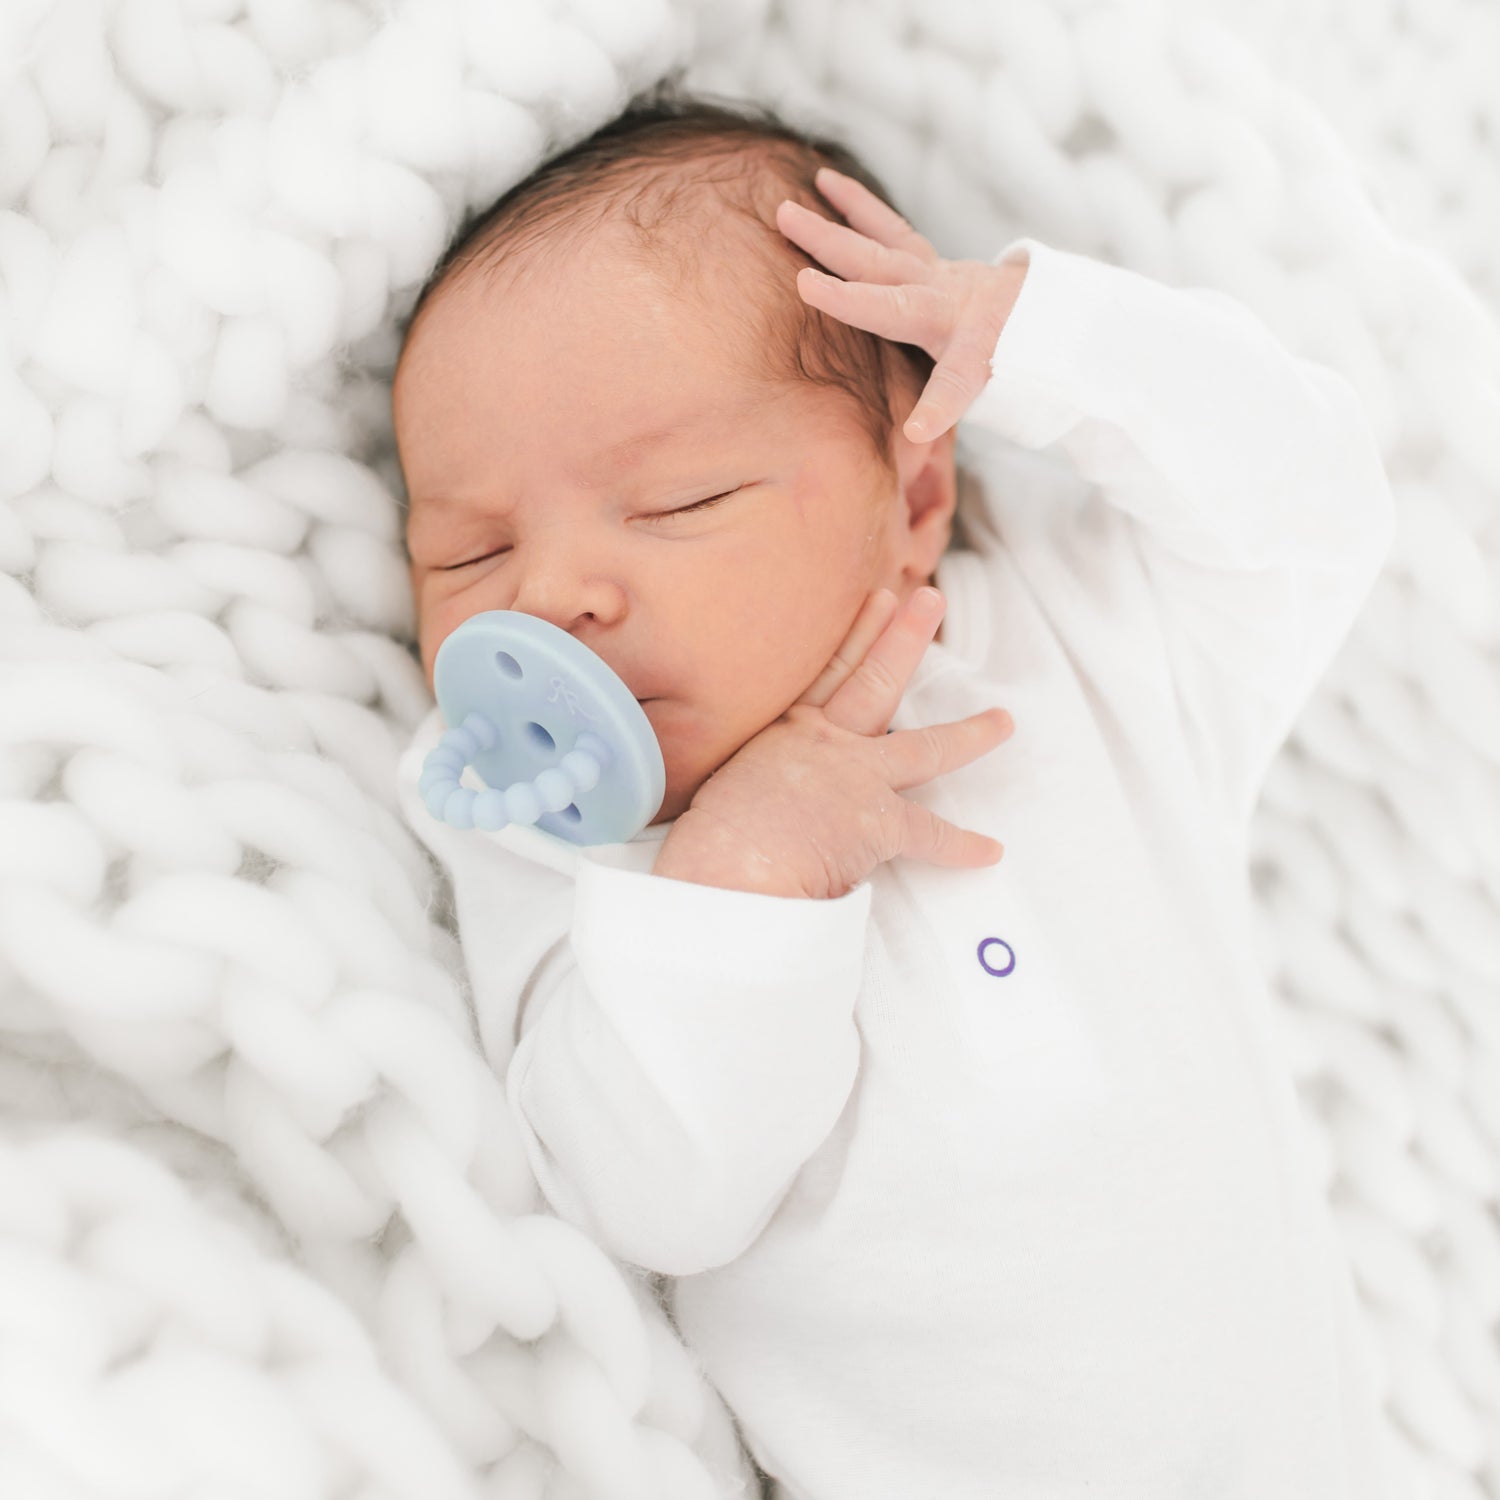 Baby using Blue Cutie PAT Bulb.